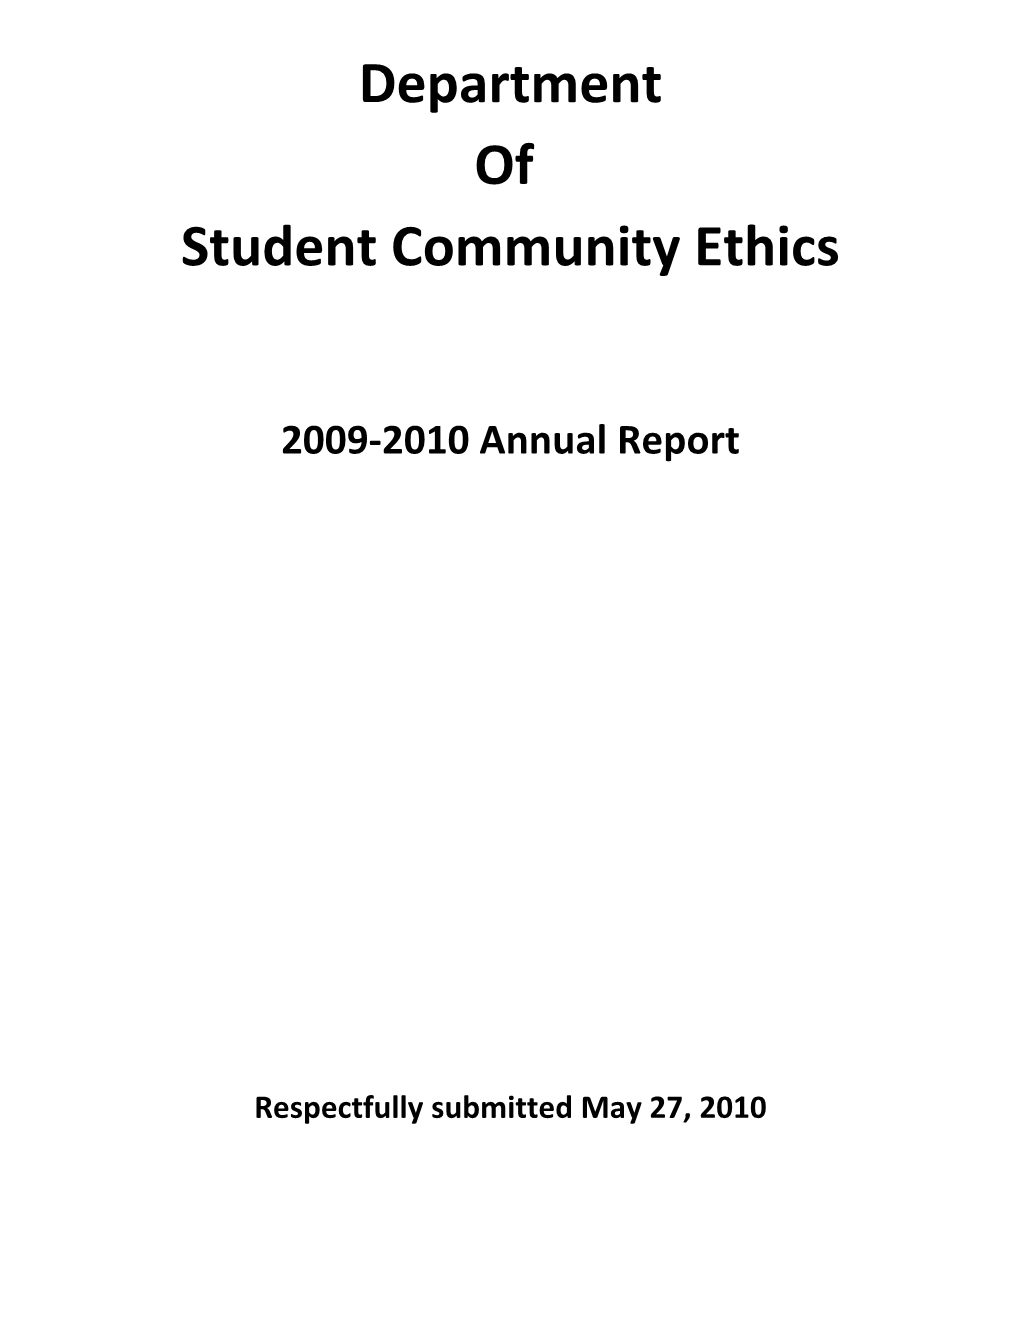 Student Community Ethics s1